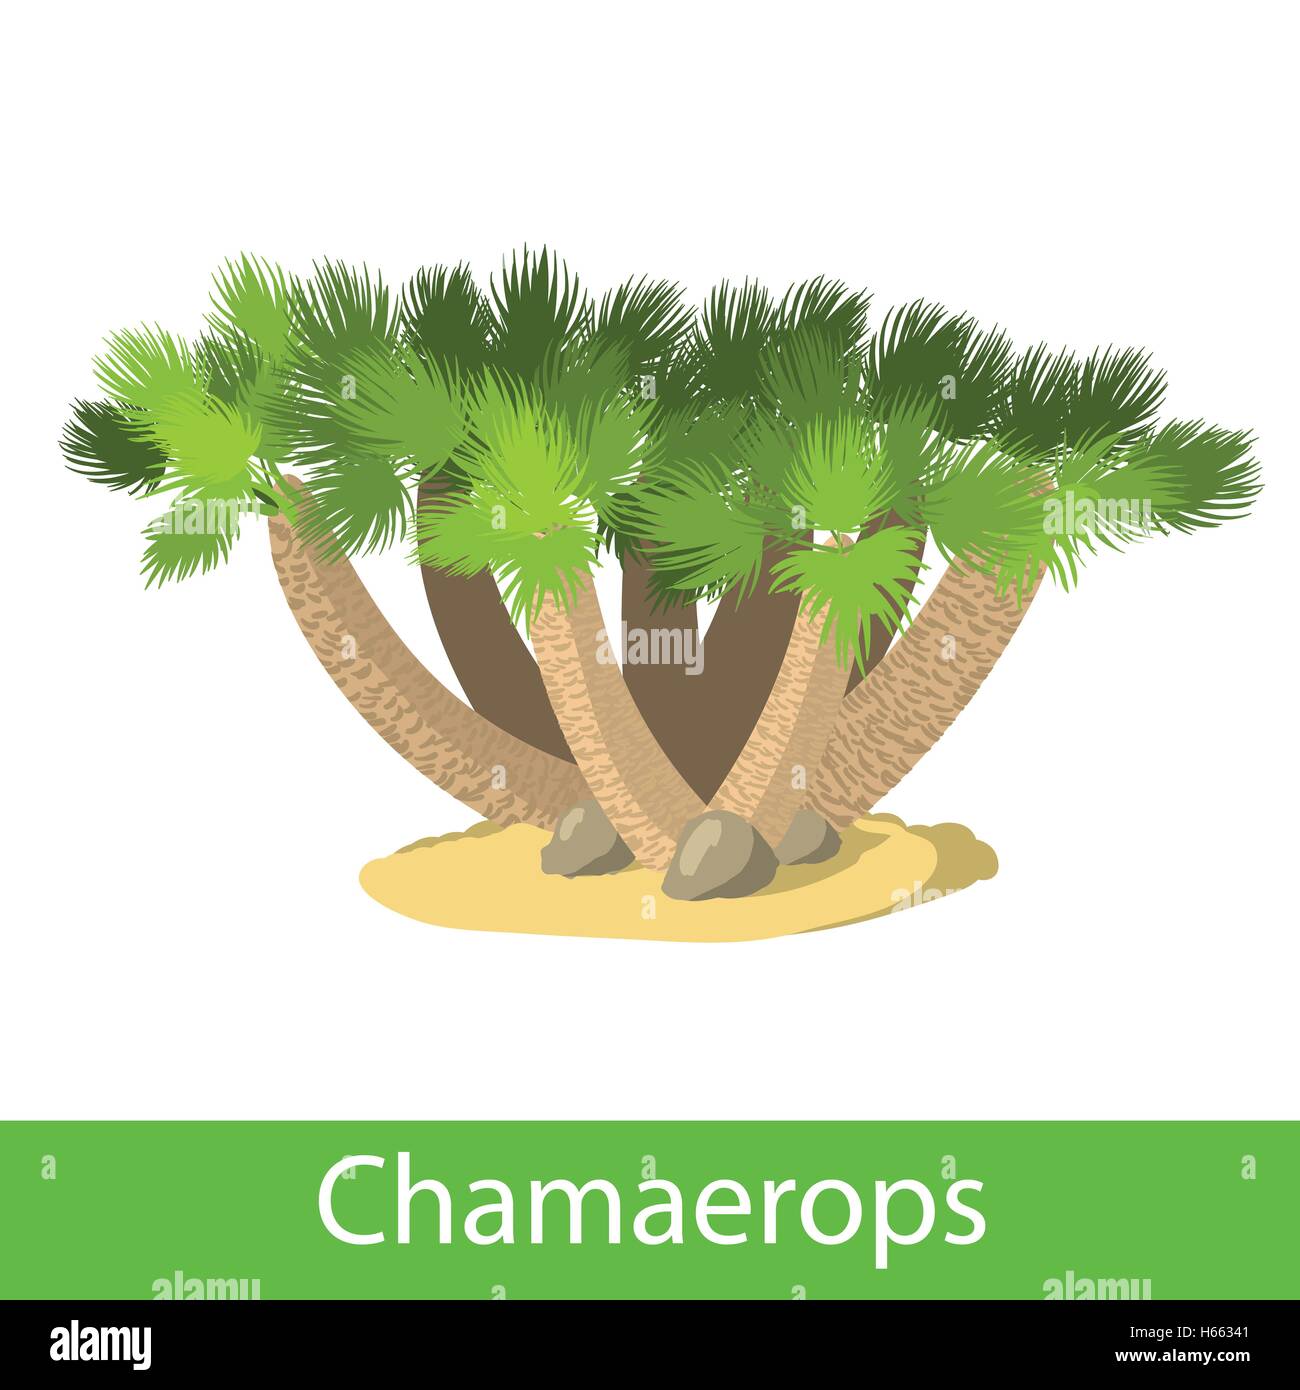 Illustration of the Chamaerops Stock Vector